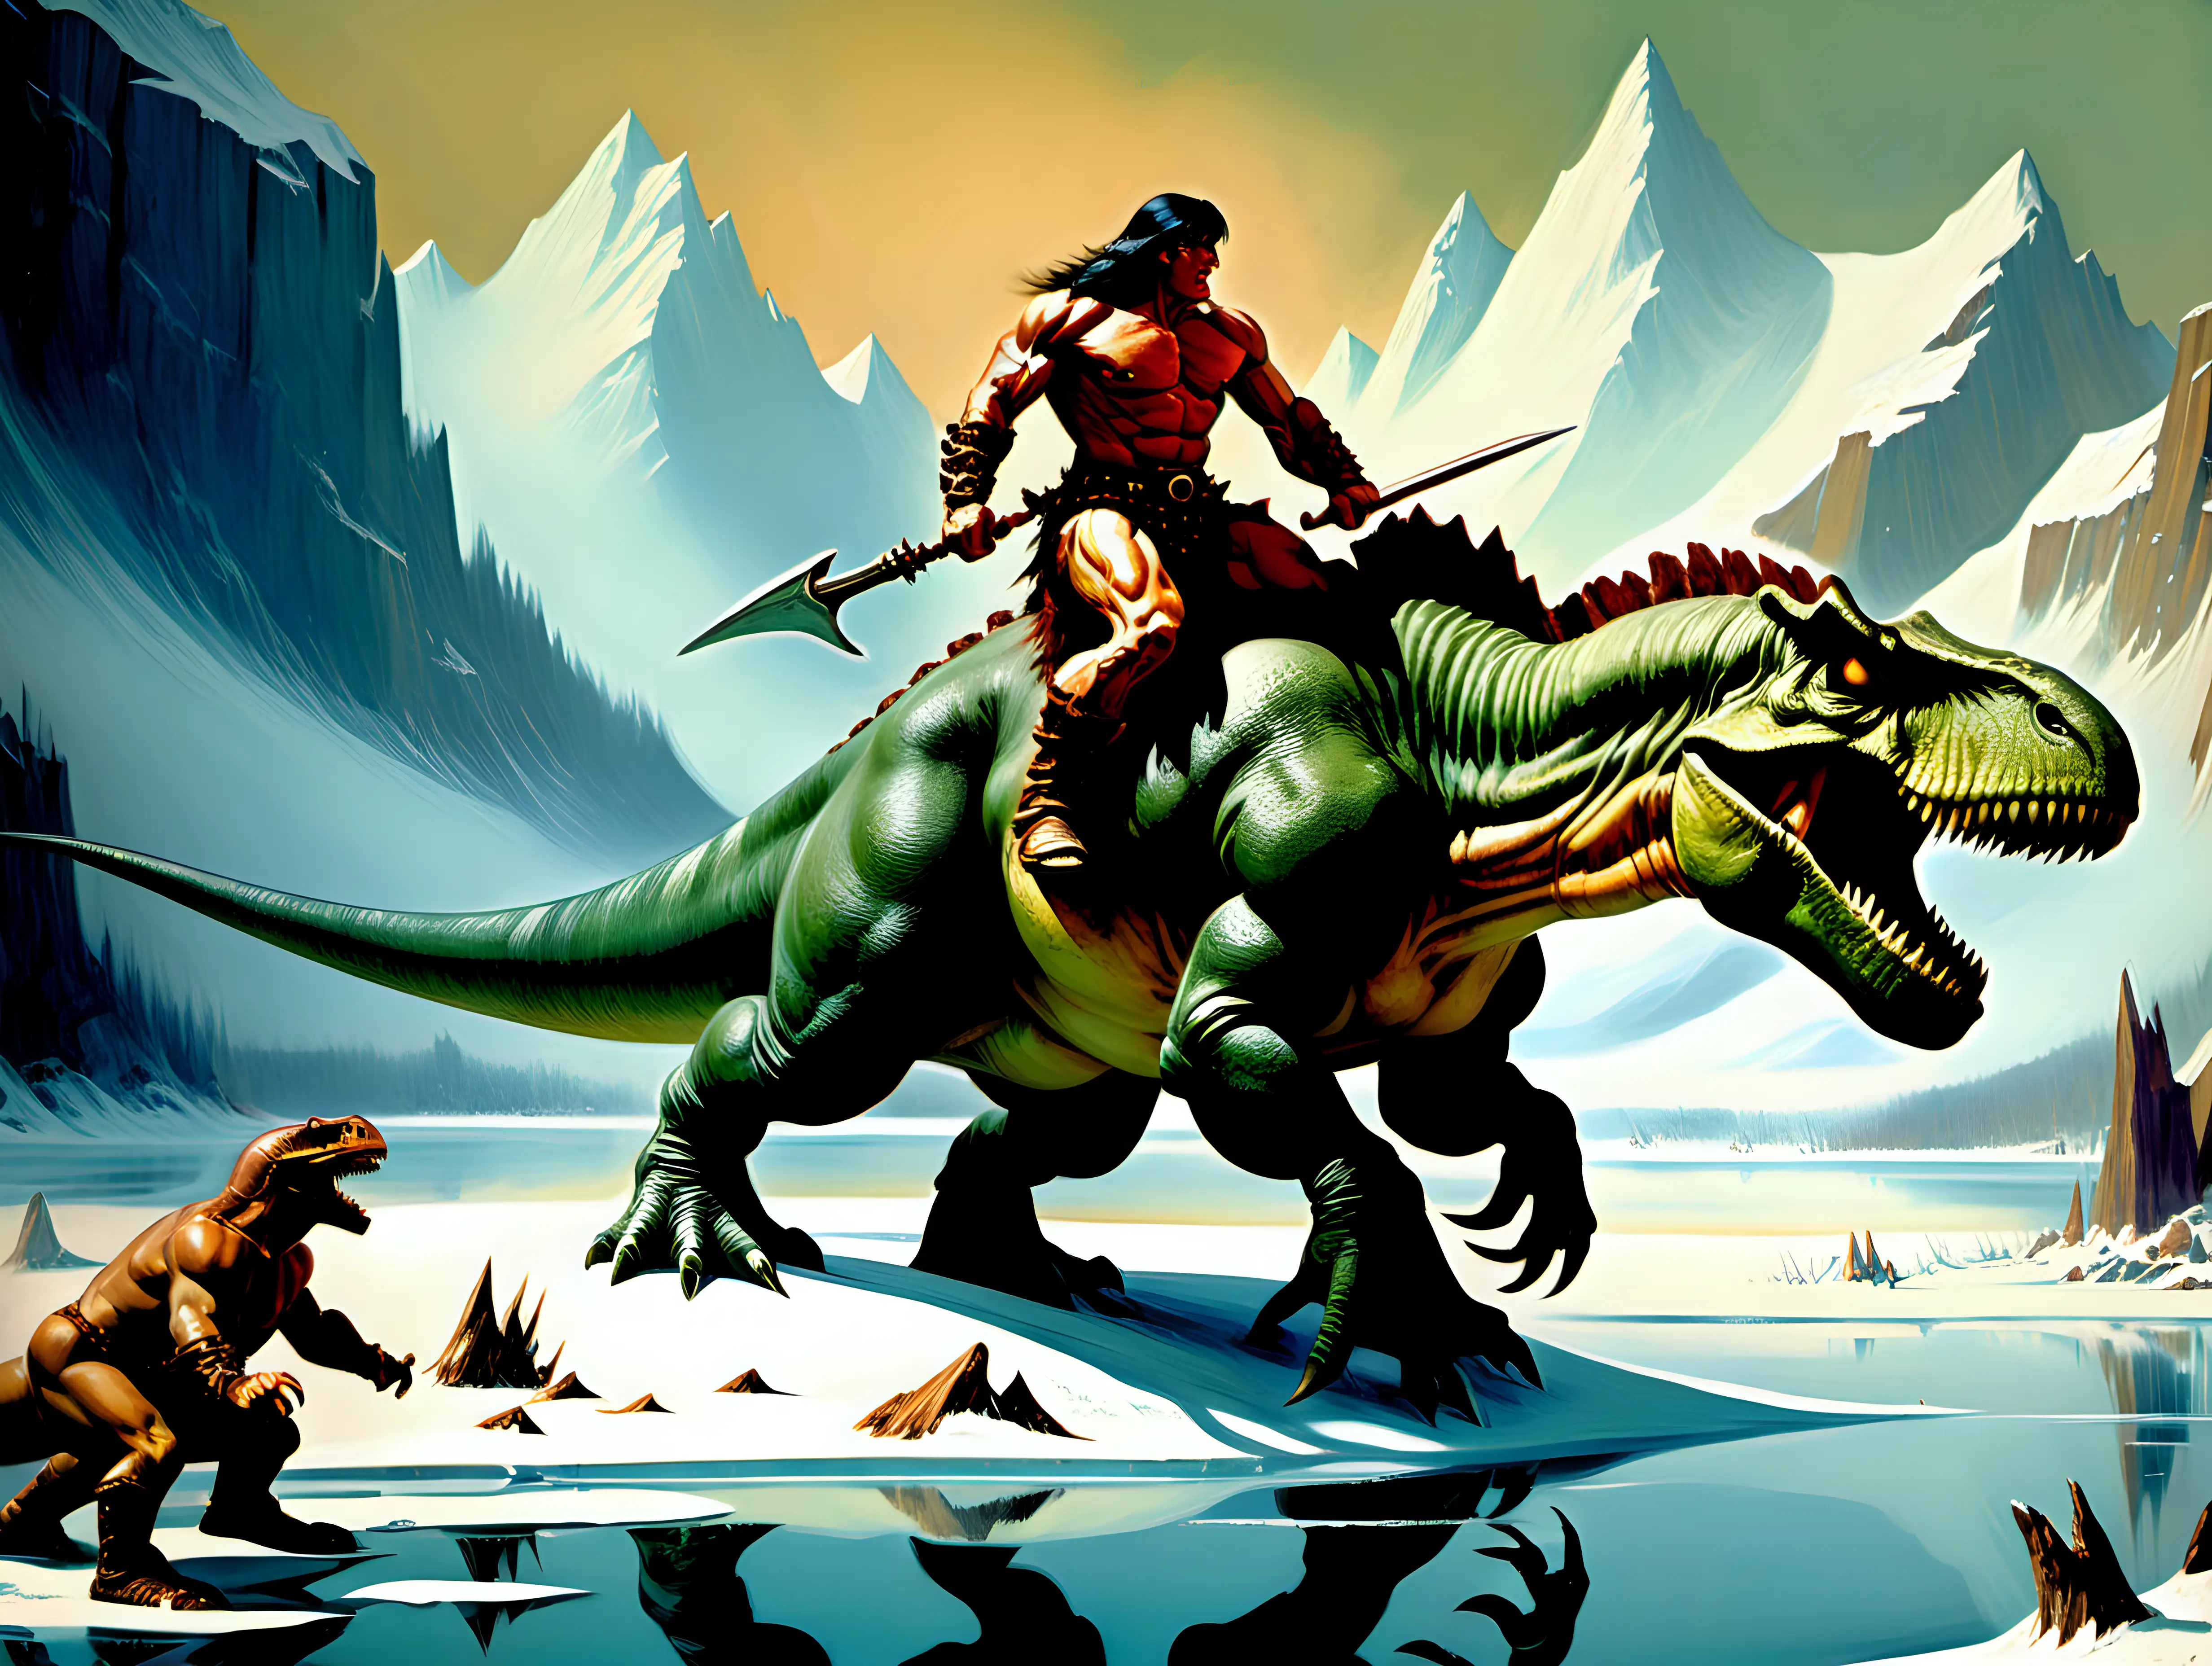 conan the barbarian riding a dinosaur on frozen lake near the mountains Frank Frazetta style